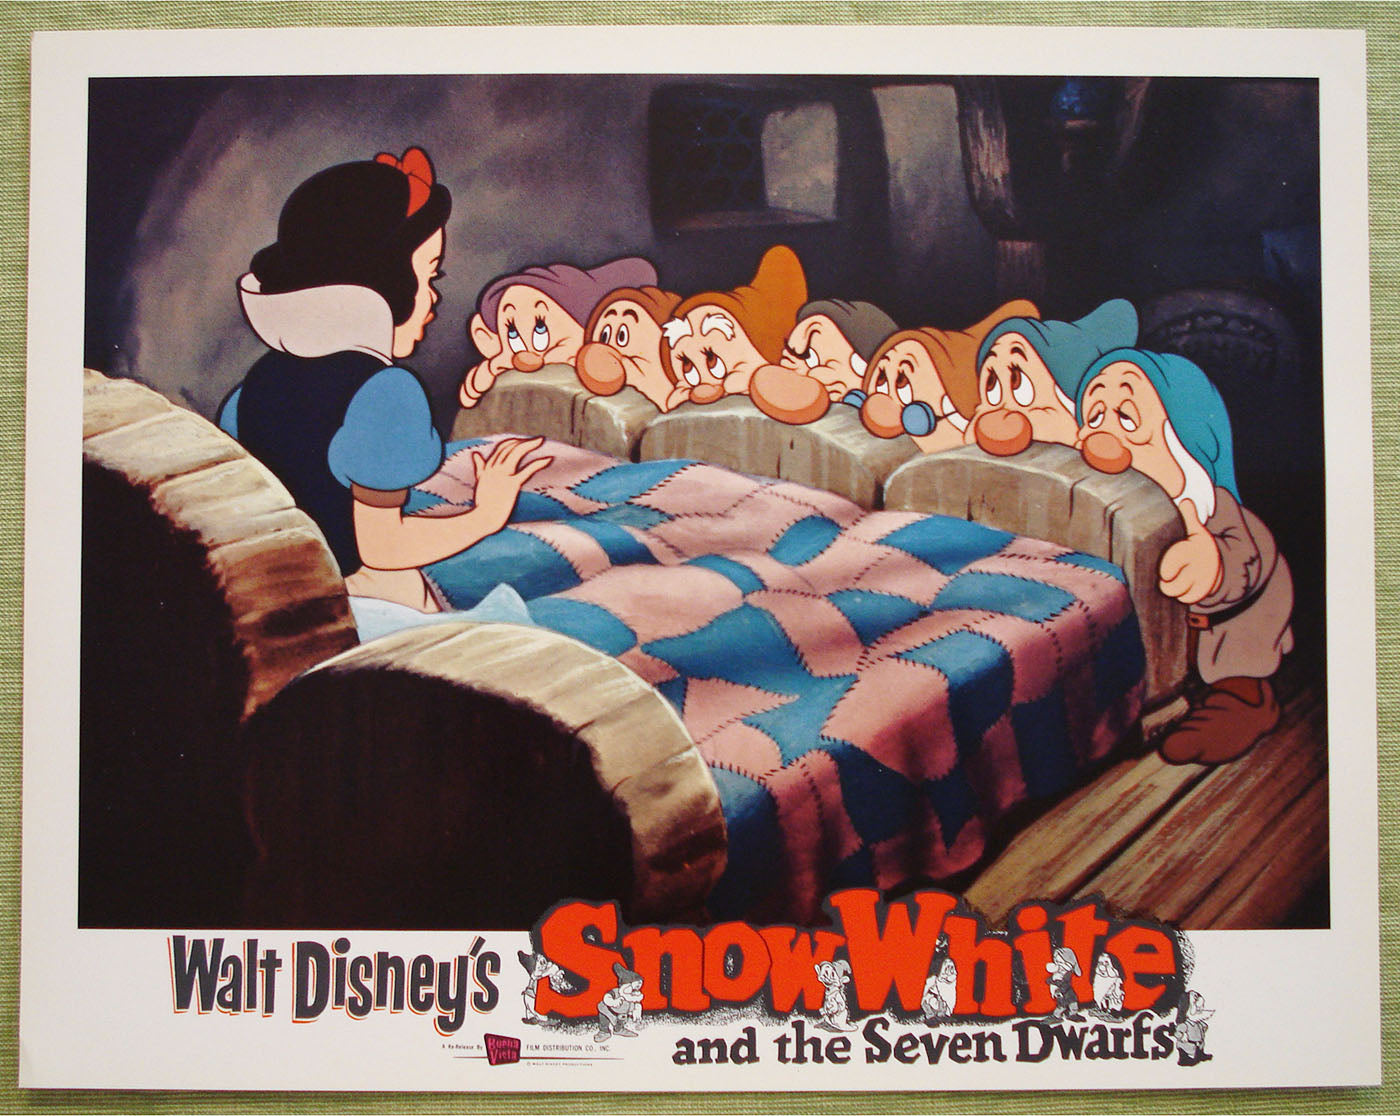 Walt Disney's Snow White & The Seven Dwarfs Envelope + 9 11x14" Lobby Cards (Re-release)